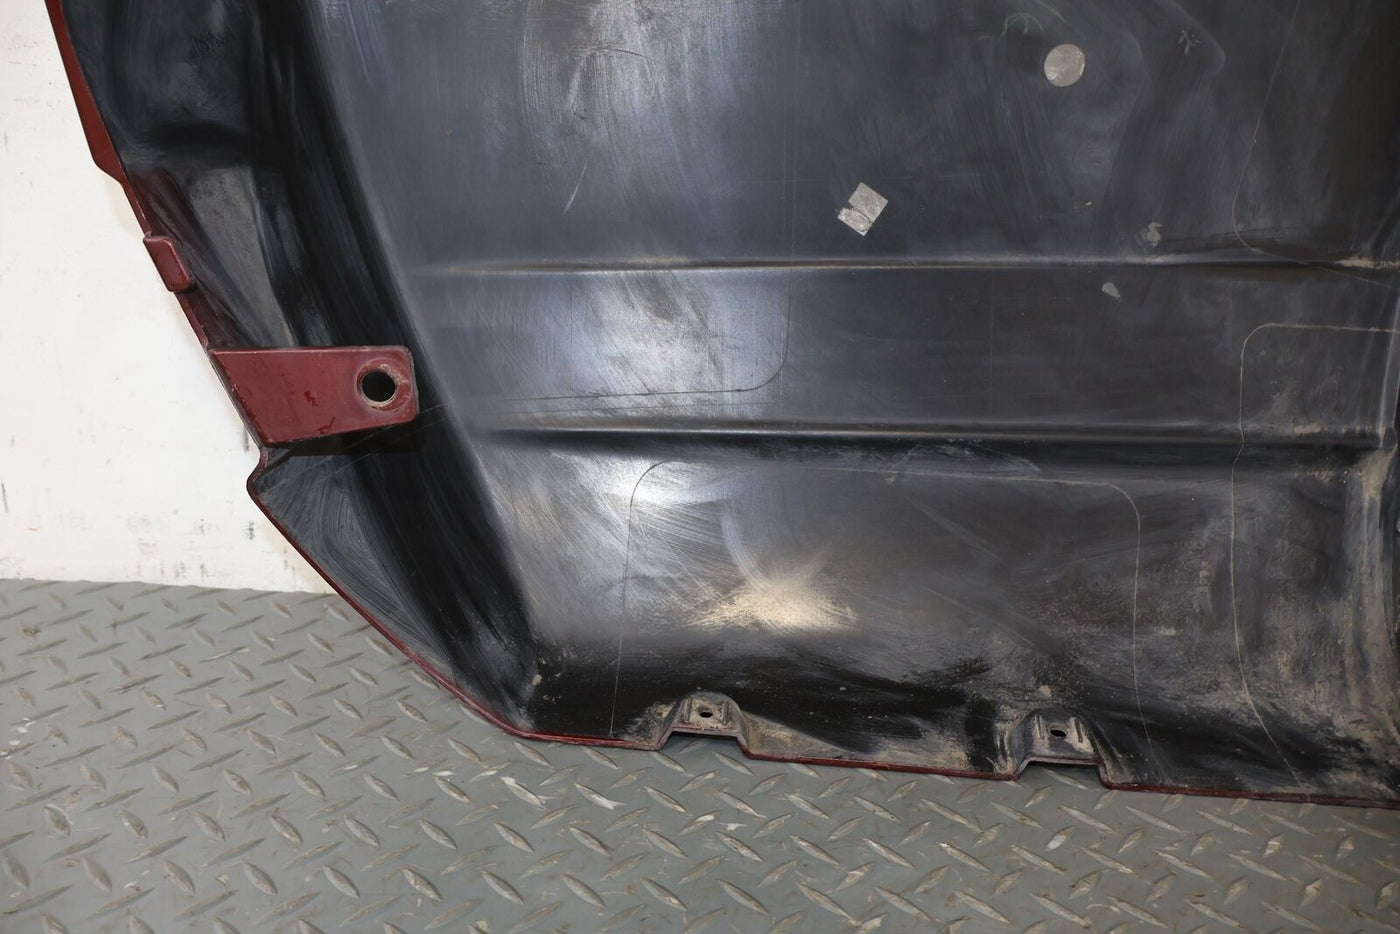 2002 Cadillac Escalade Short WB Rear Left Quarter Panel Moulding (Redfire 72U)